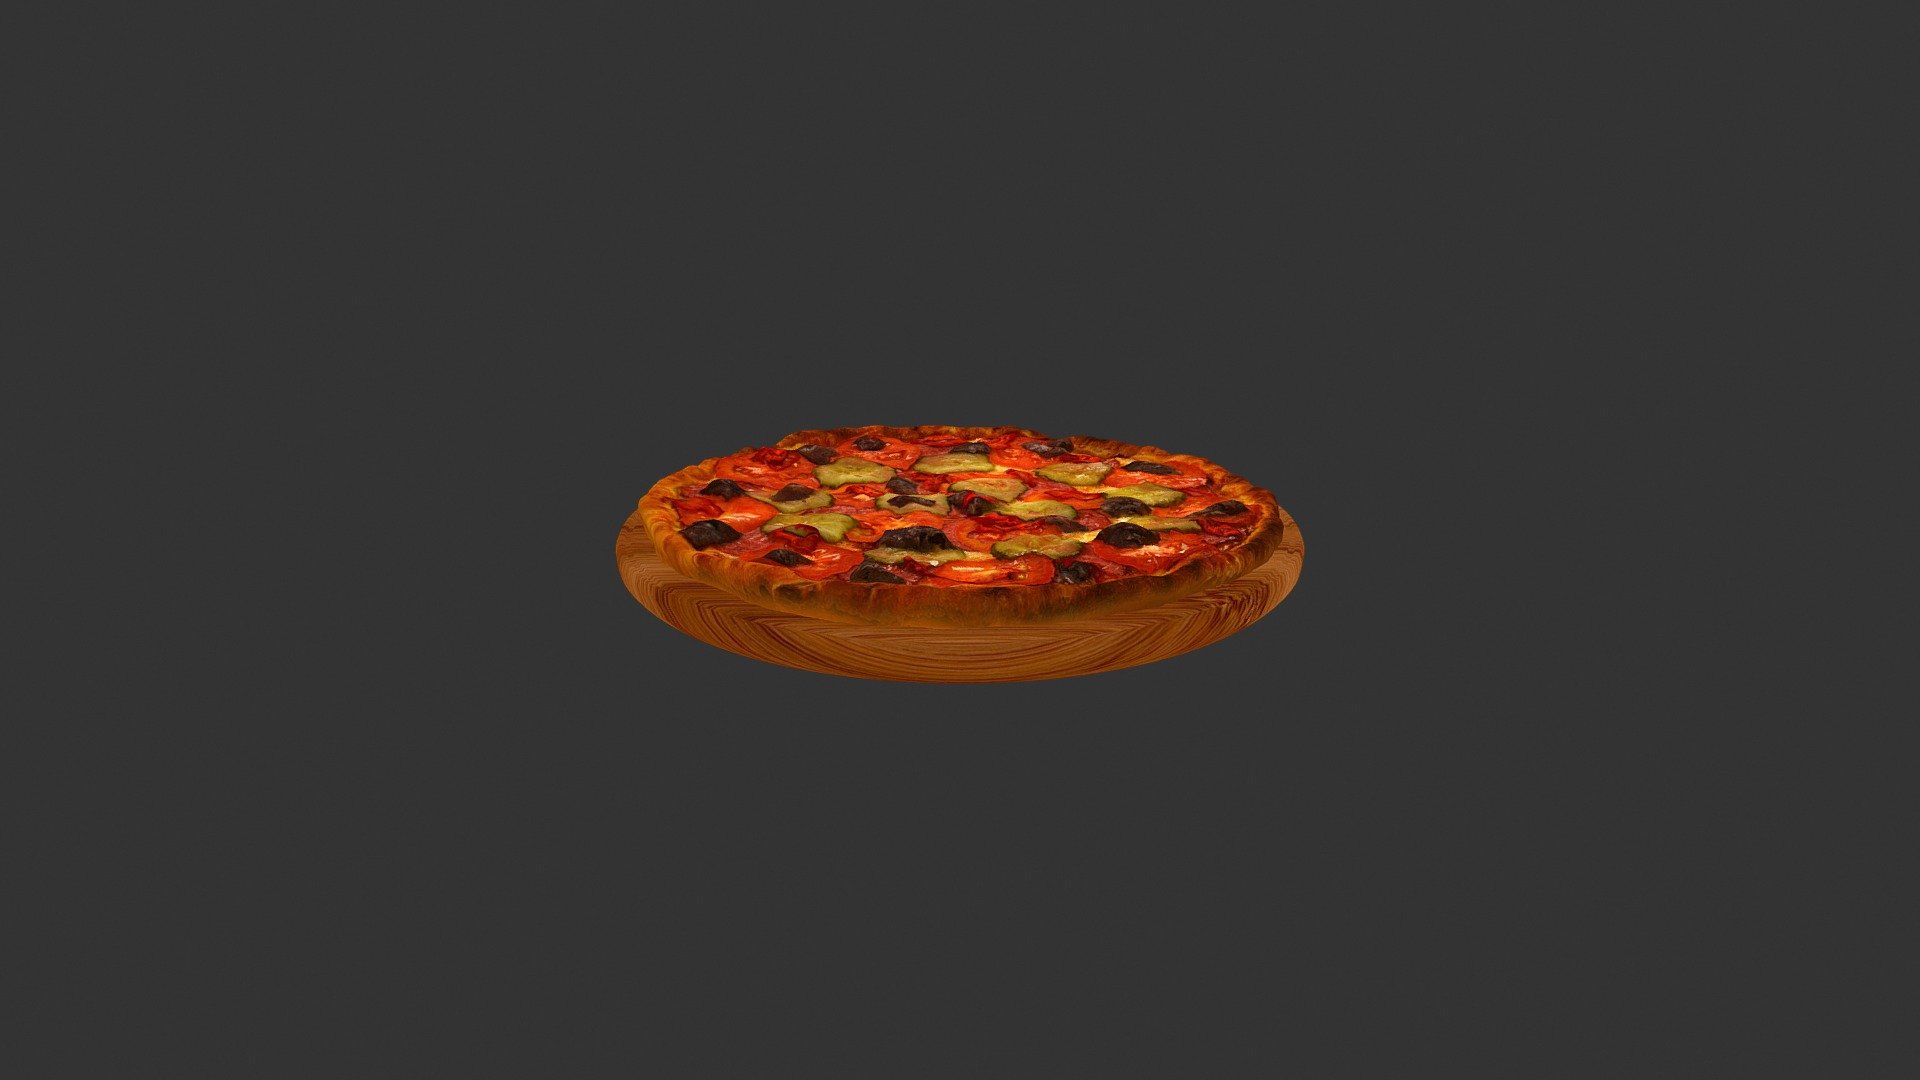 Піца Східна красуня (Red_mix_pizza) - 3D model by alex.alexandrov.a 3d model